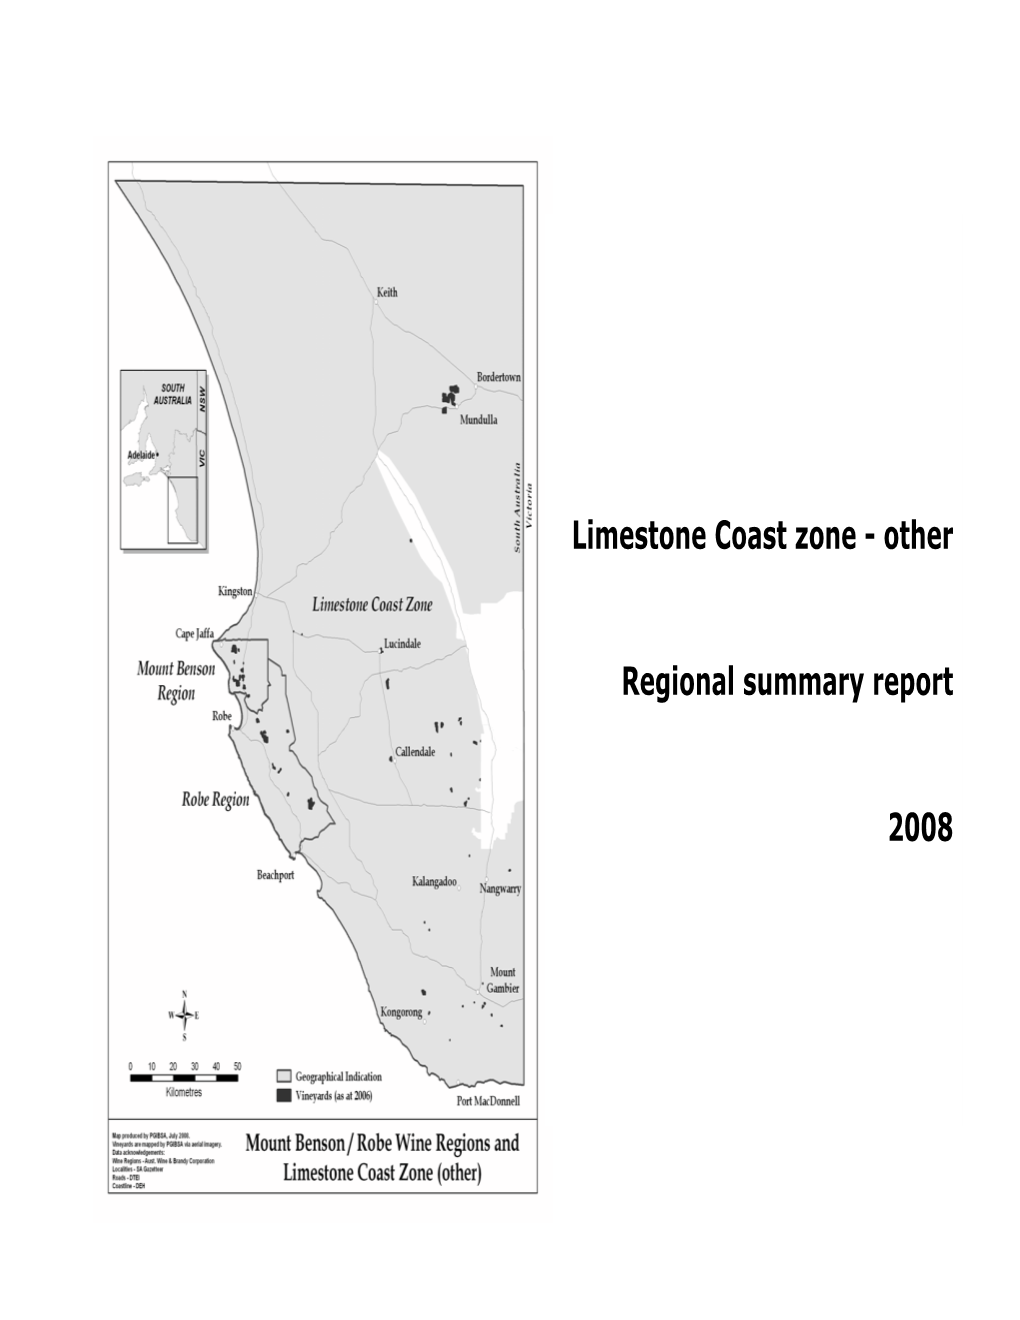 Limestone Coast Zone - Other